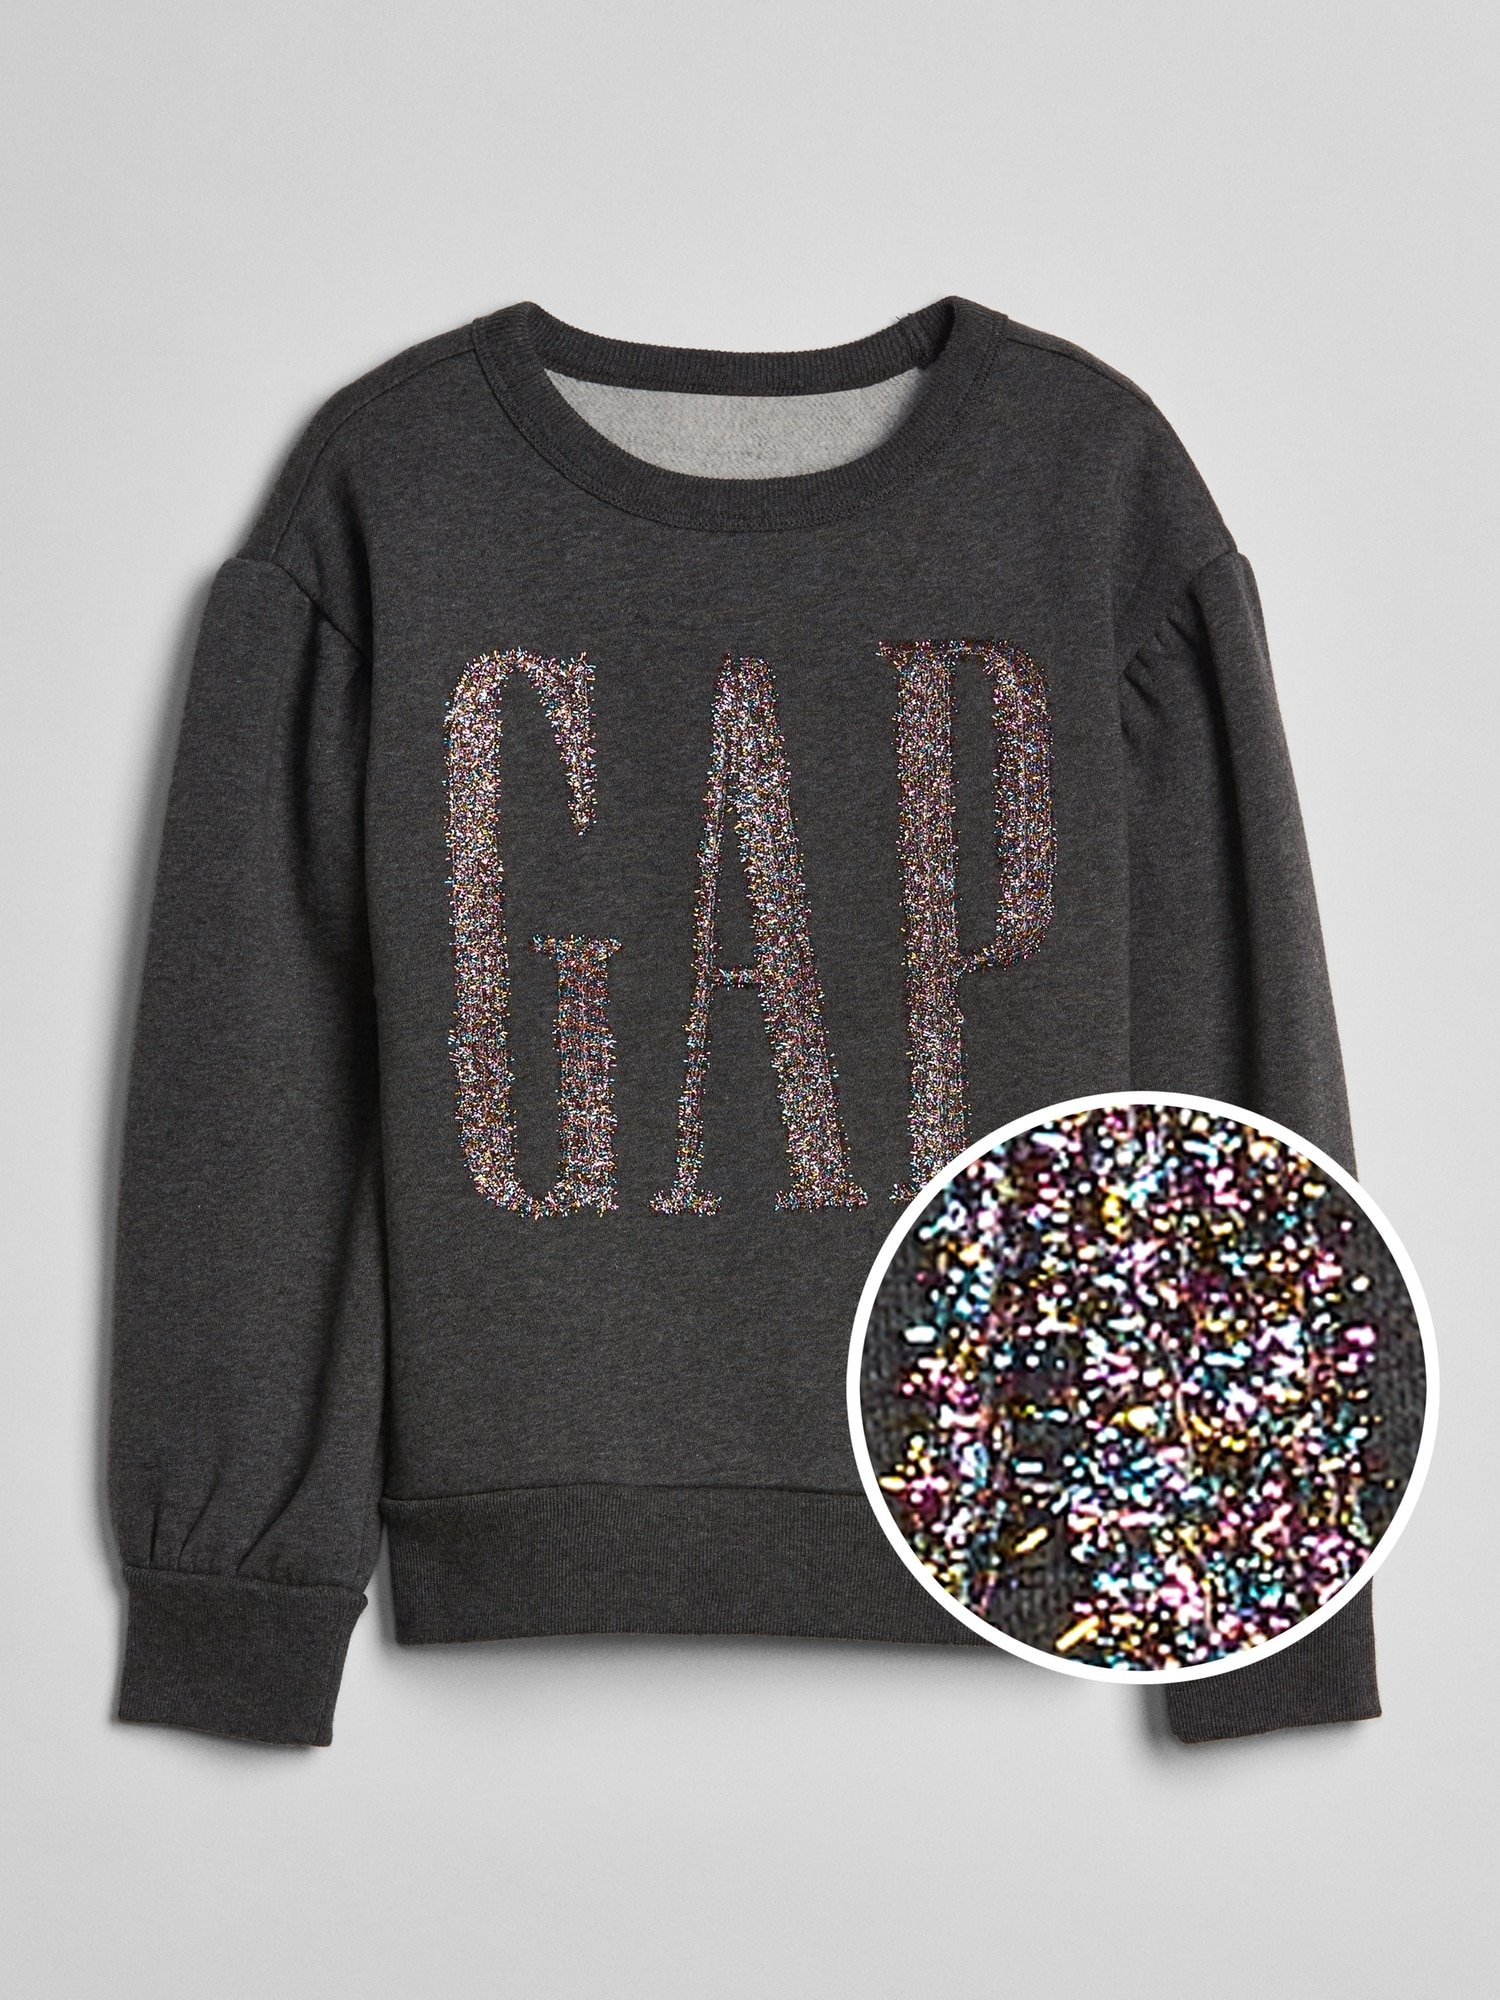 Gap Logo Sweatshirt product image